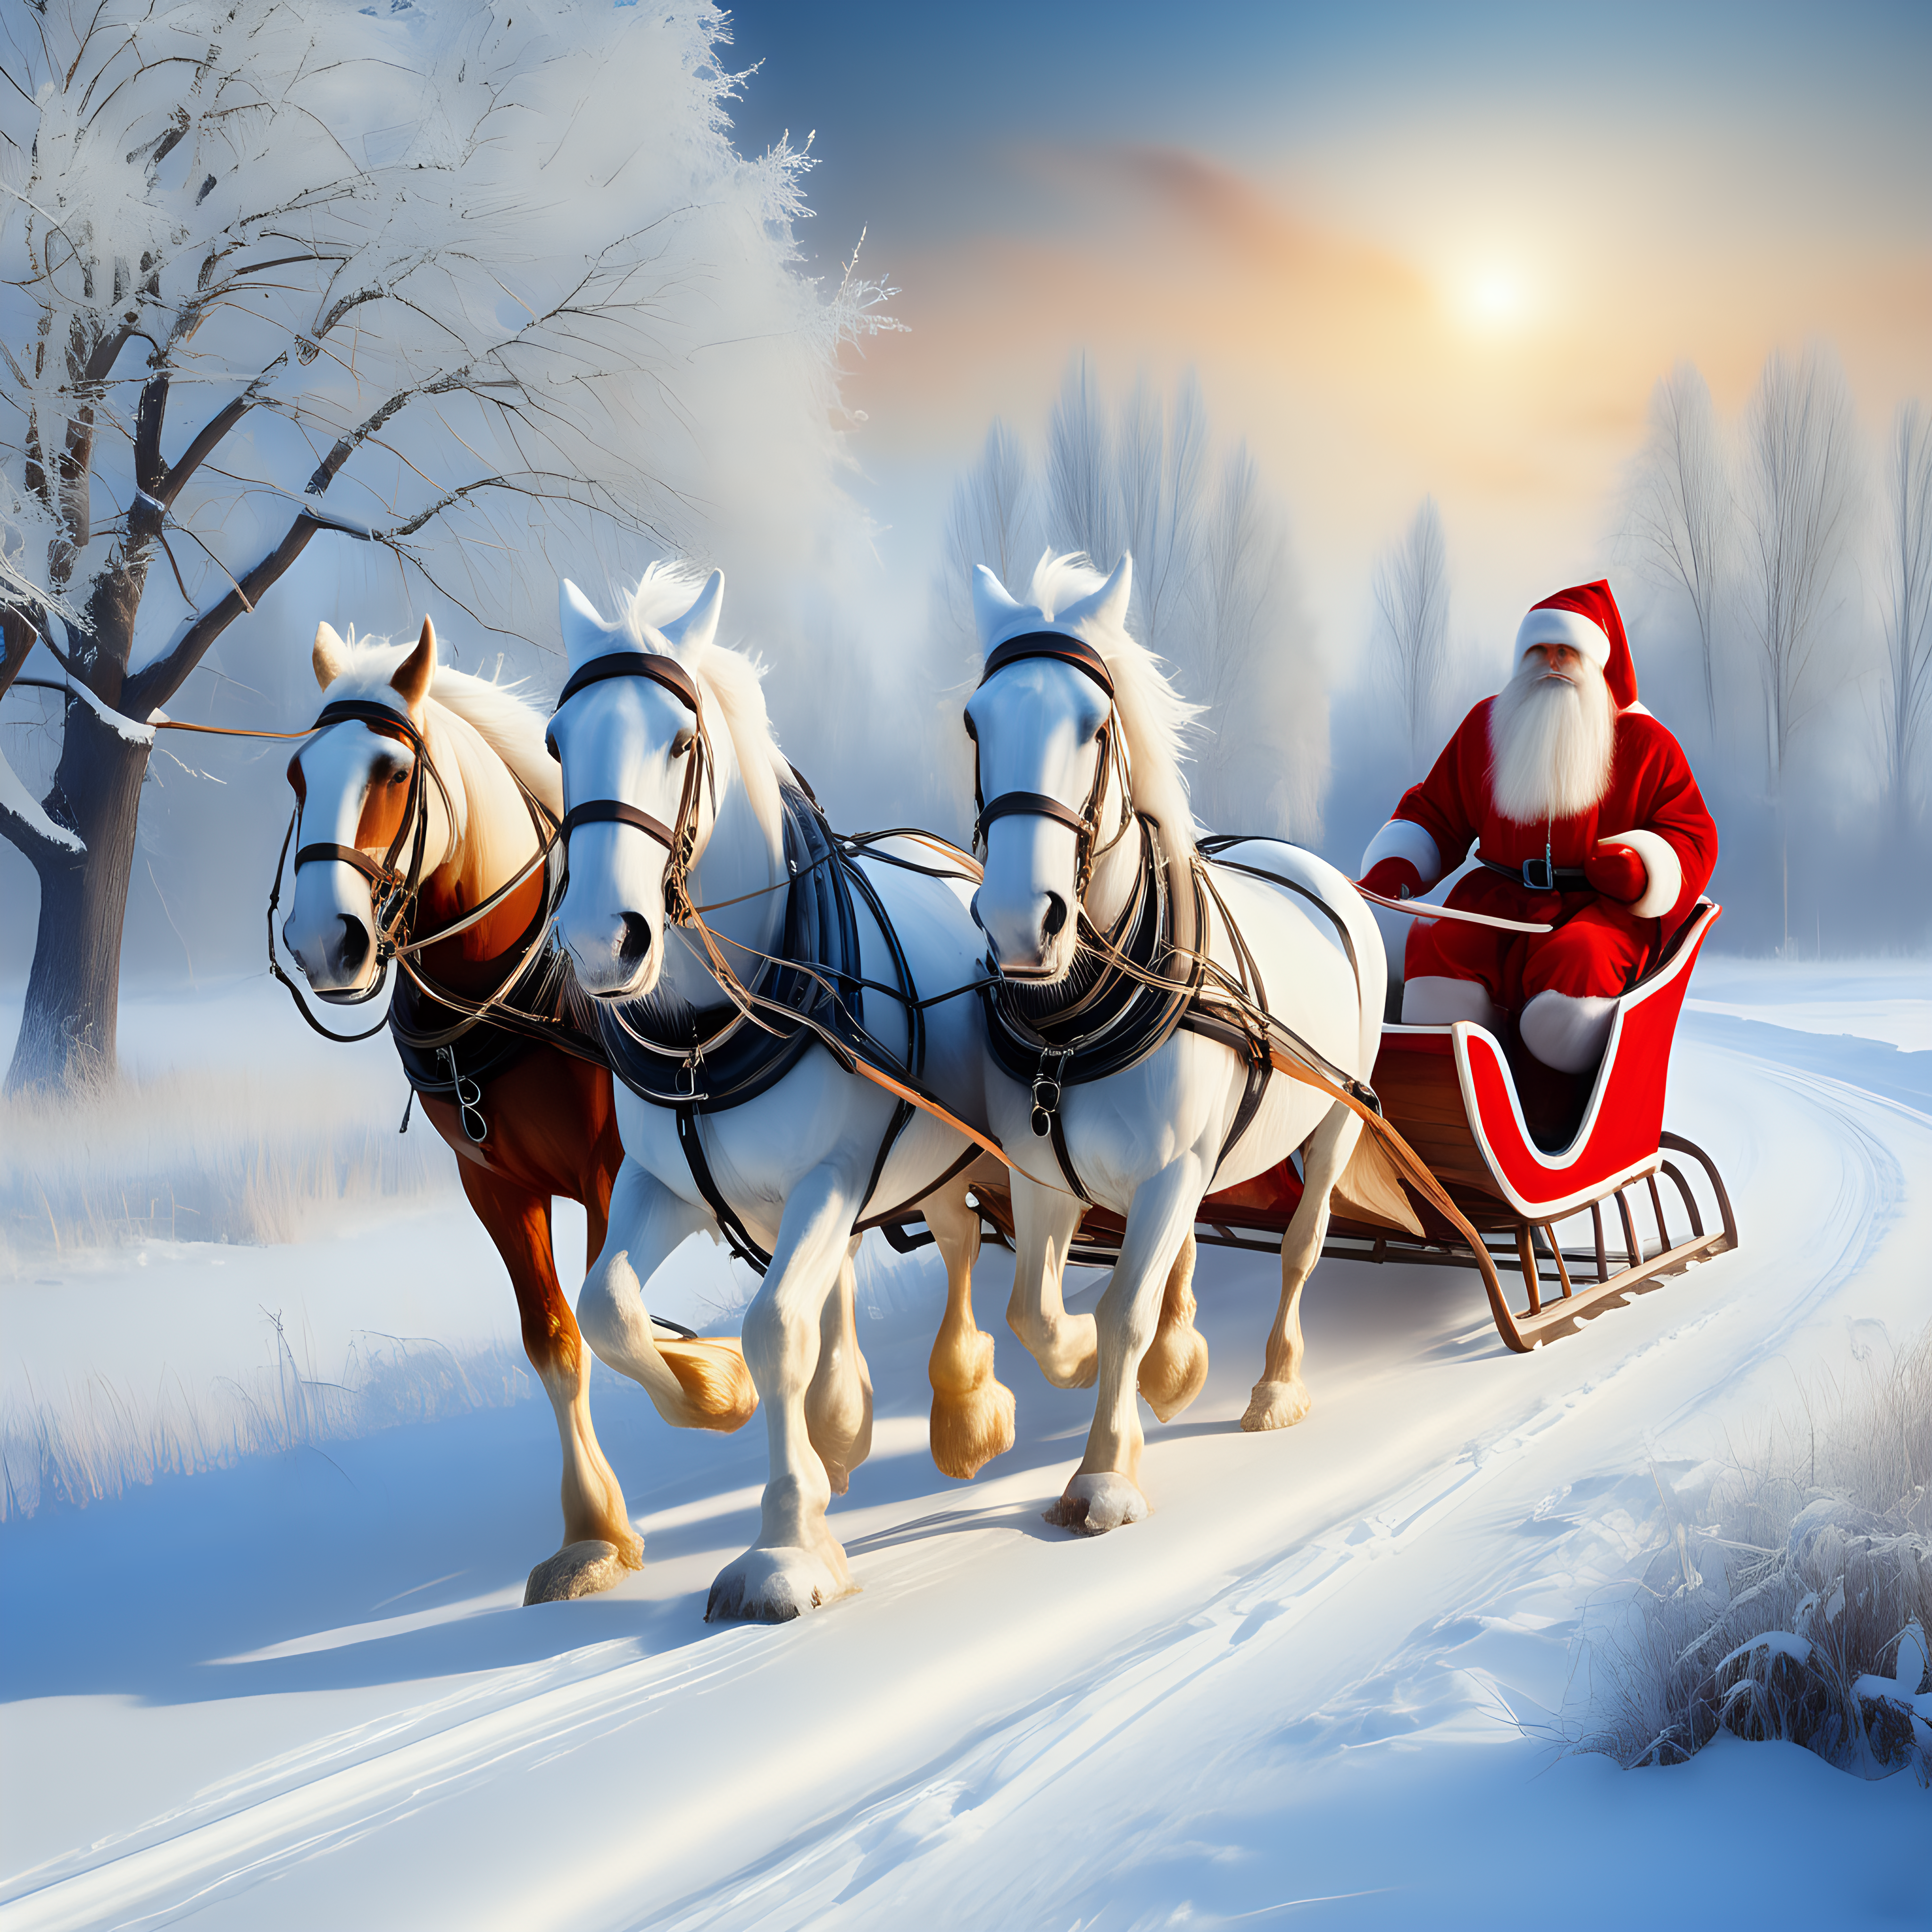 Рождество, дед мороз со снегурочкой в санях, запряженных тремя лошадьми, зимний пейзаж